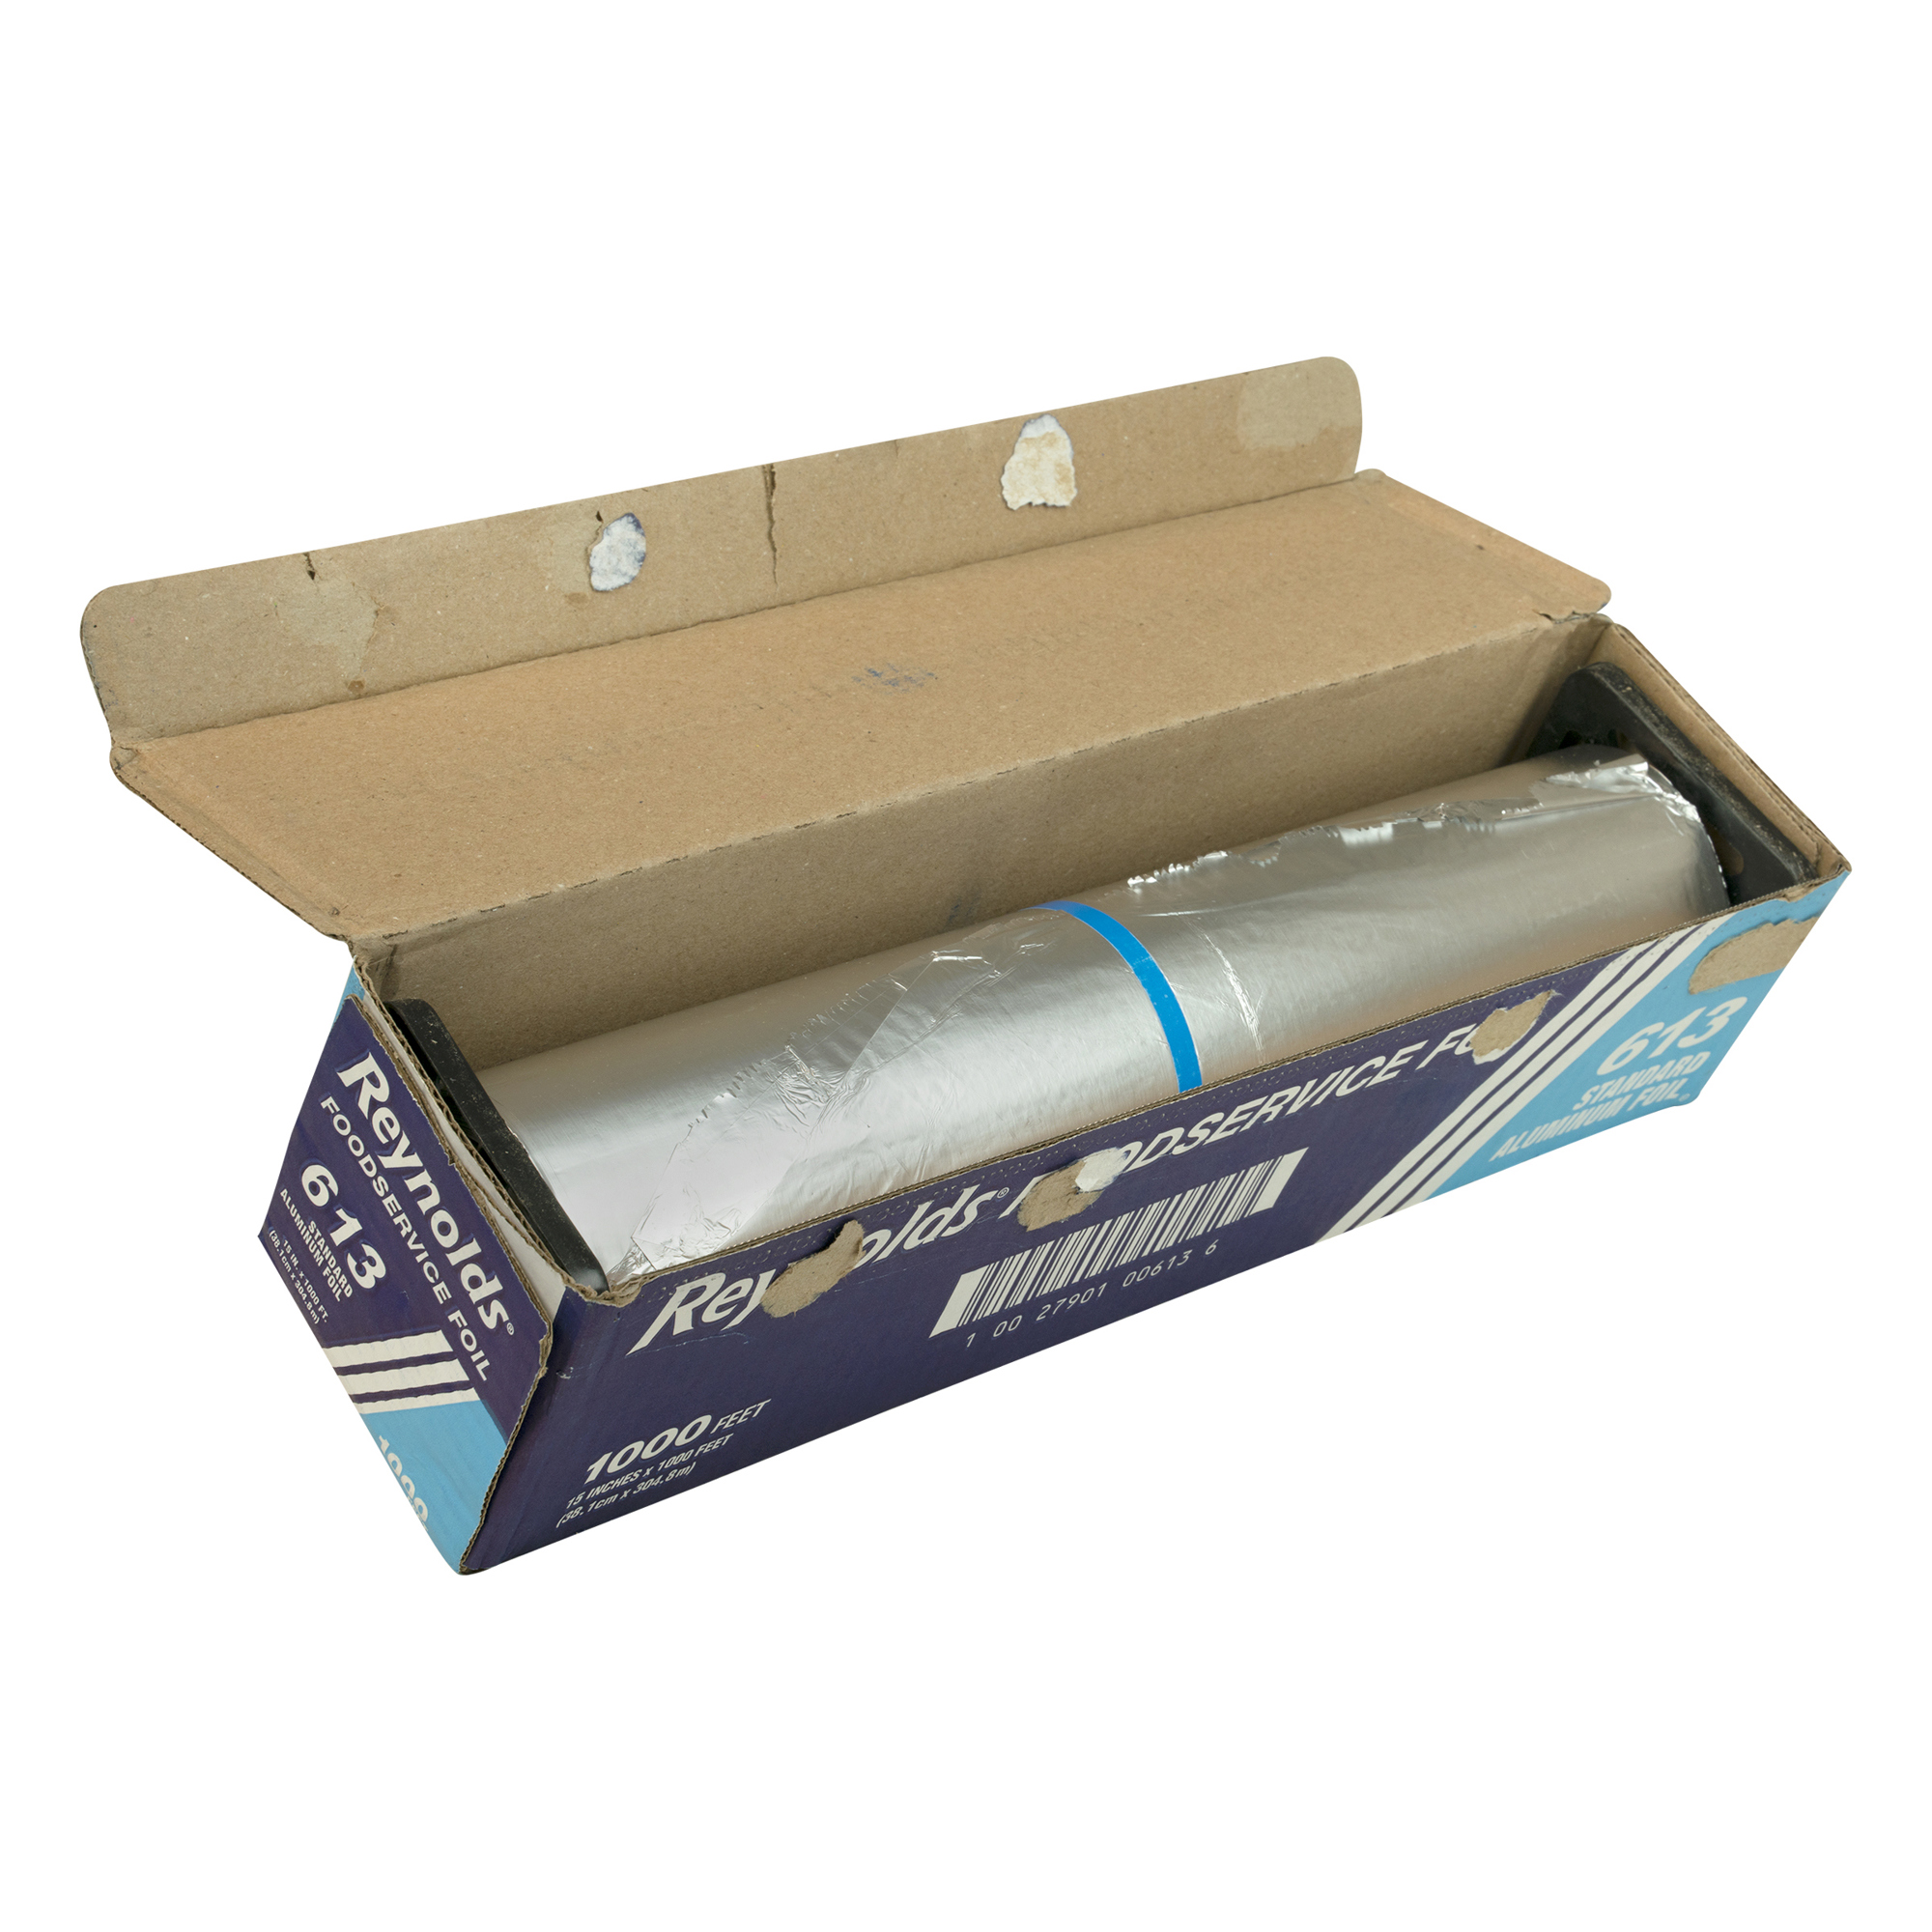 High Density Foodservice Aluminum Foil Cutterbox – Prime Source Brands